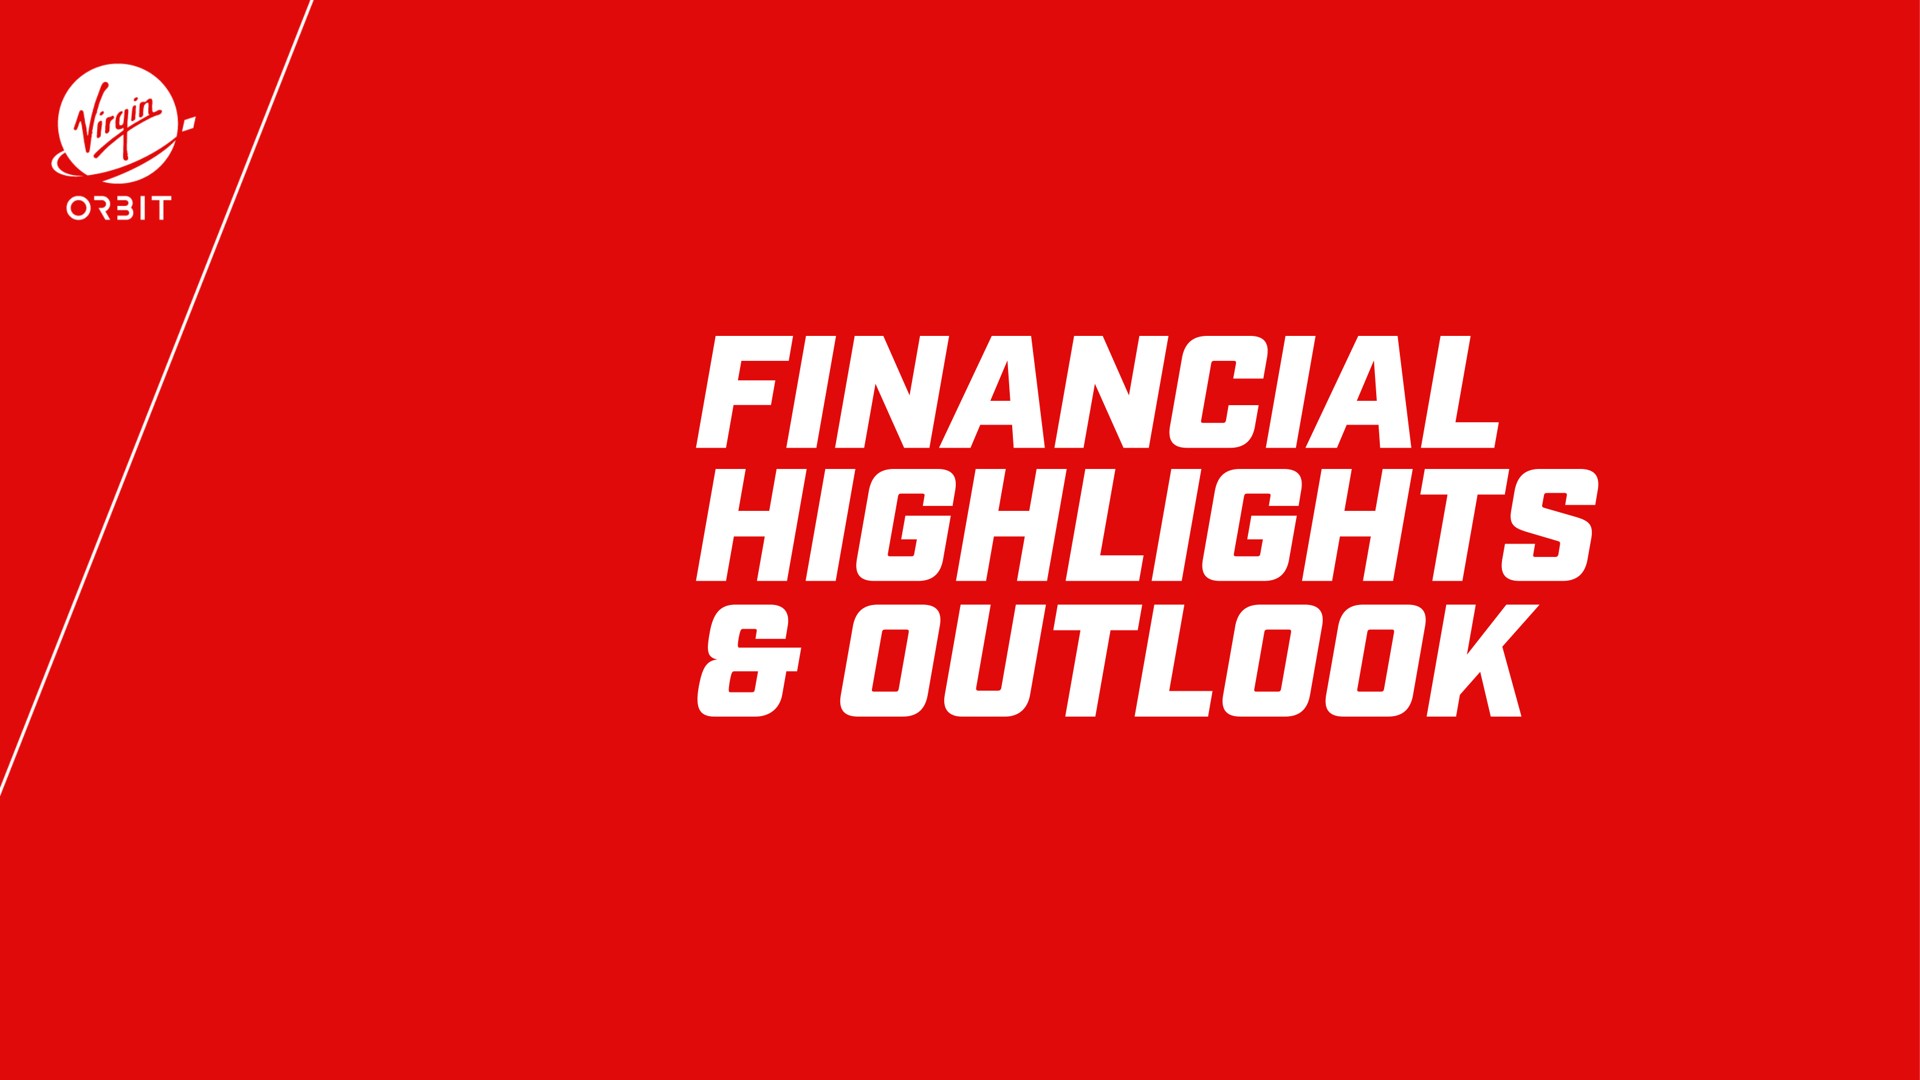 financial highlights outlook mae | Virgin Orbit